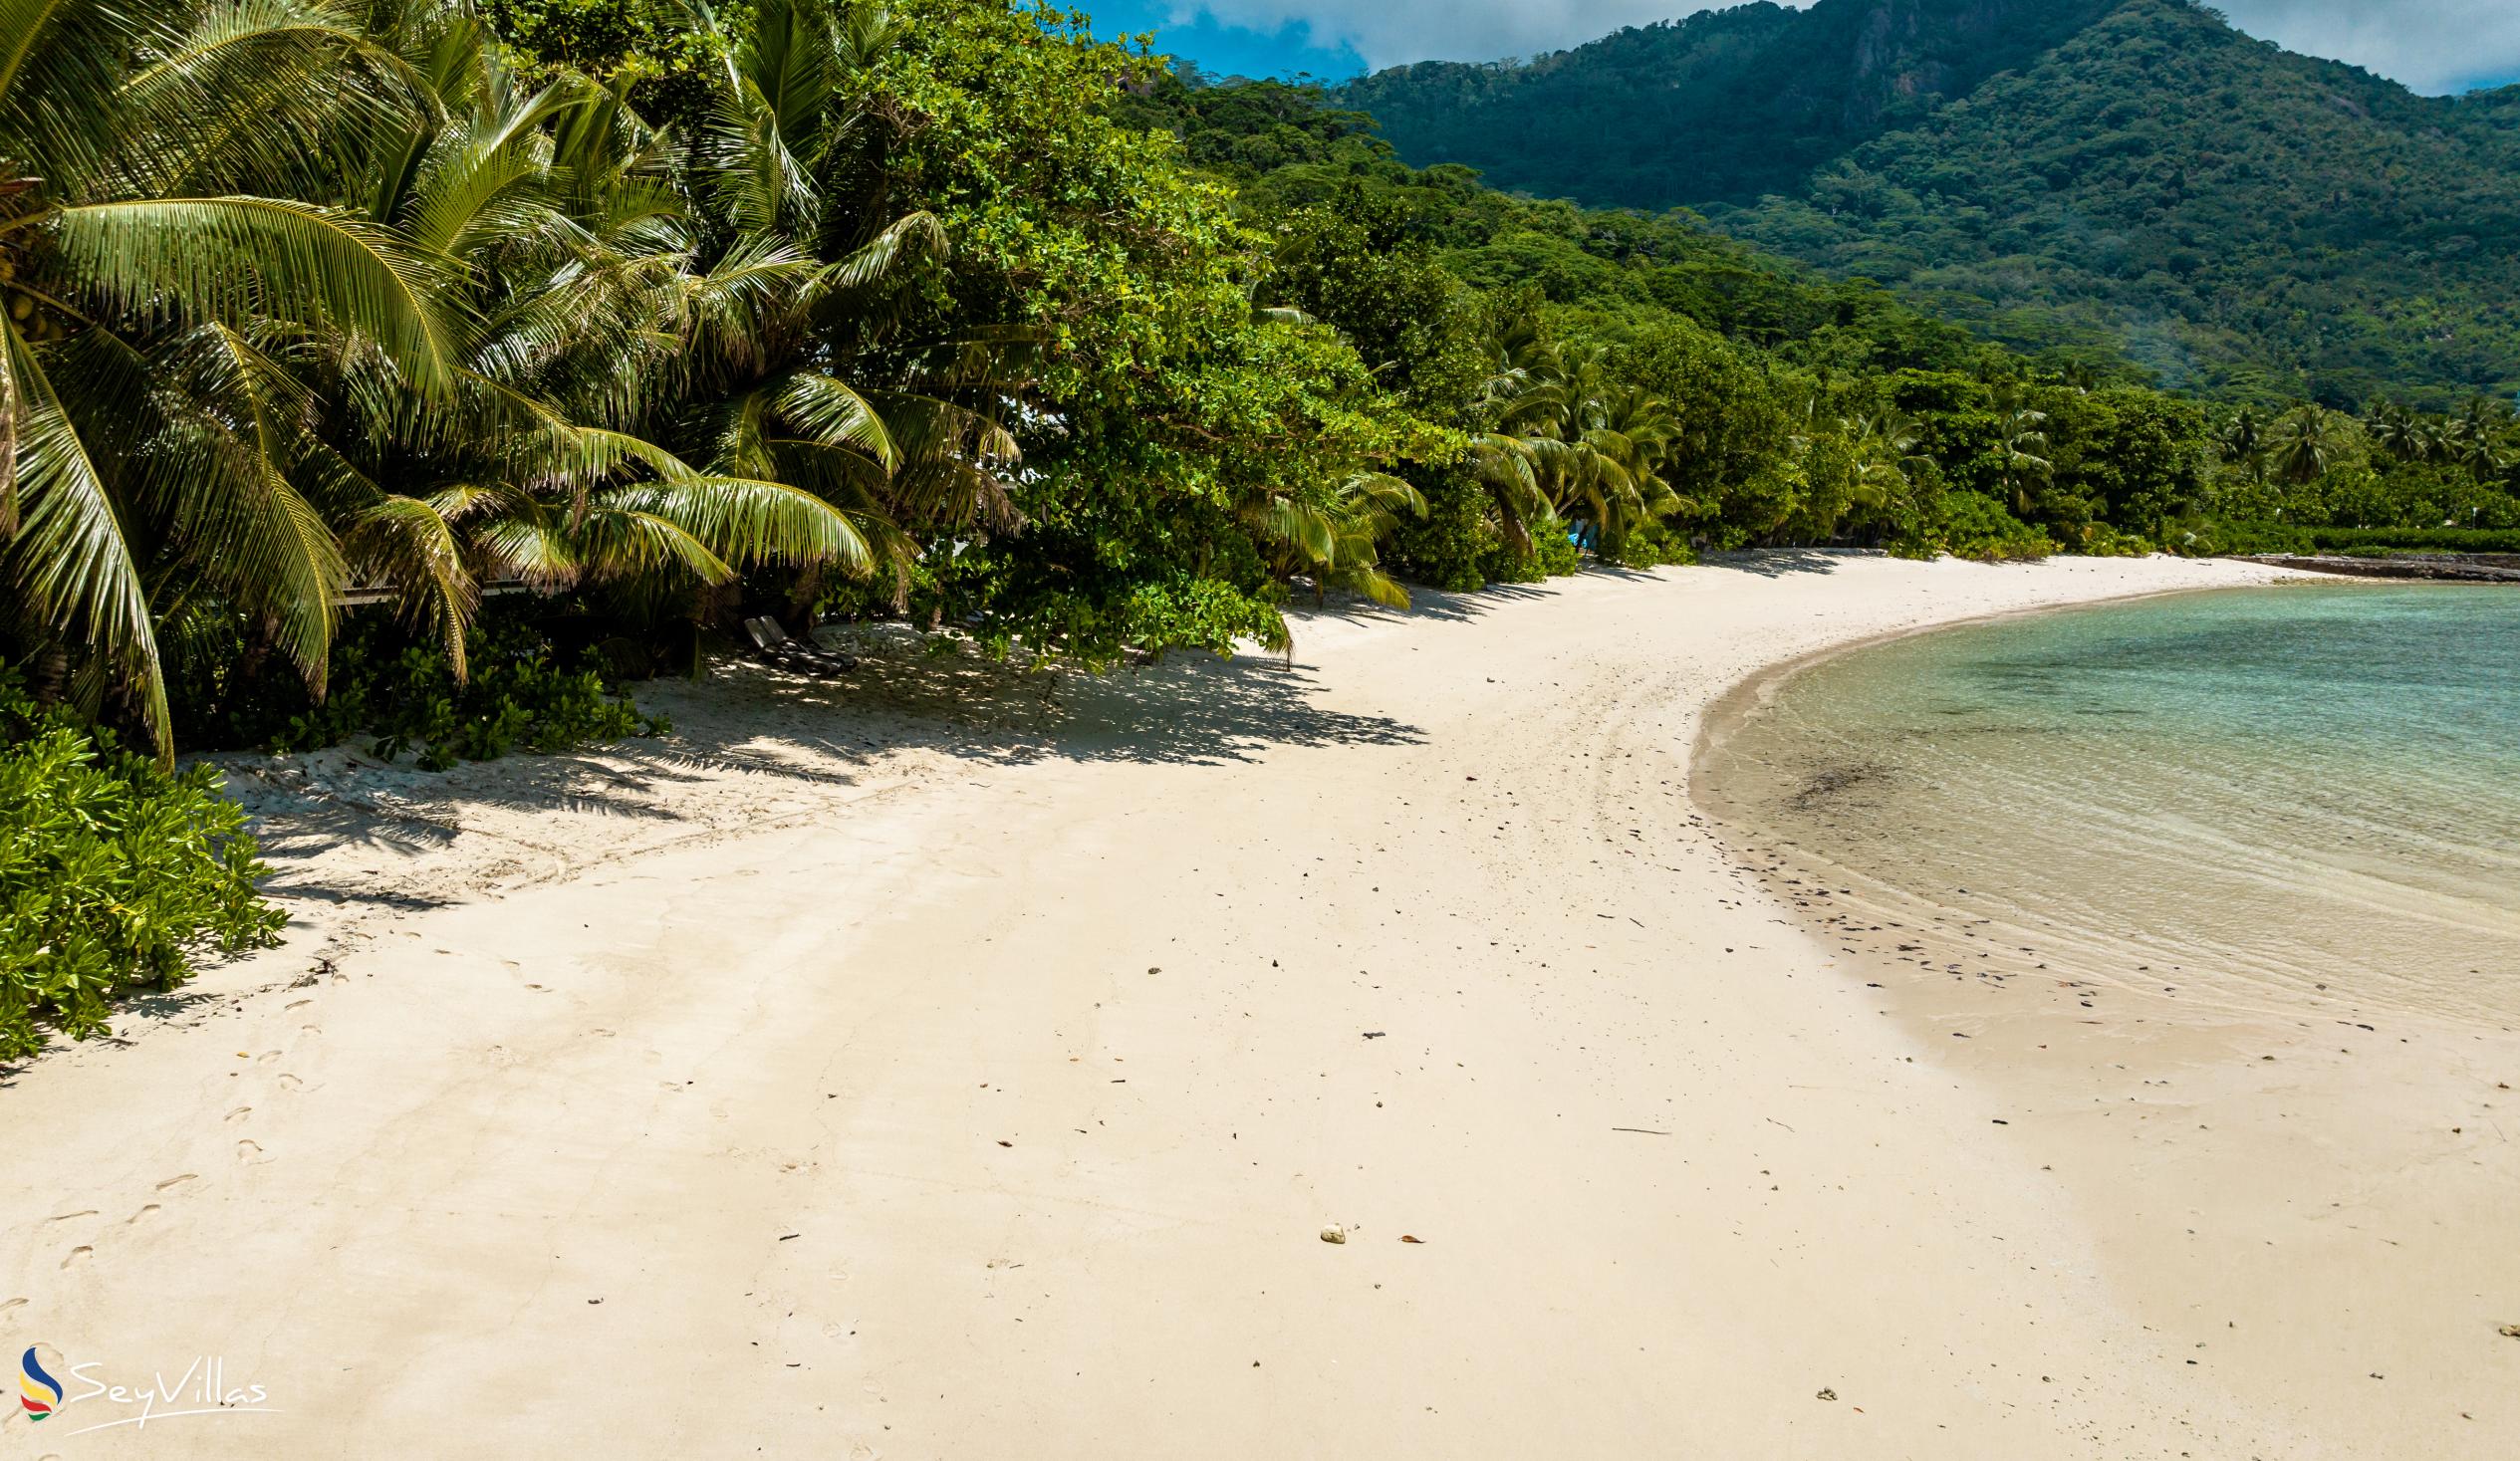 Photo 122: La Belle Tortue - Location - Silhouette Island (Seychelles)